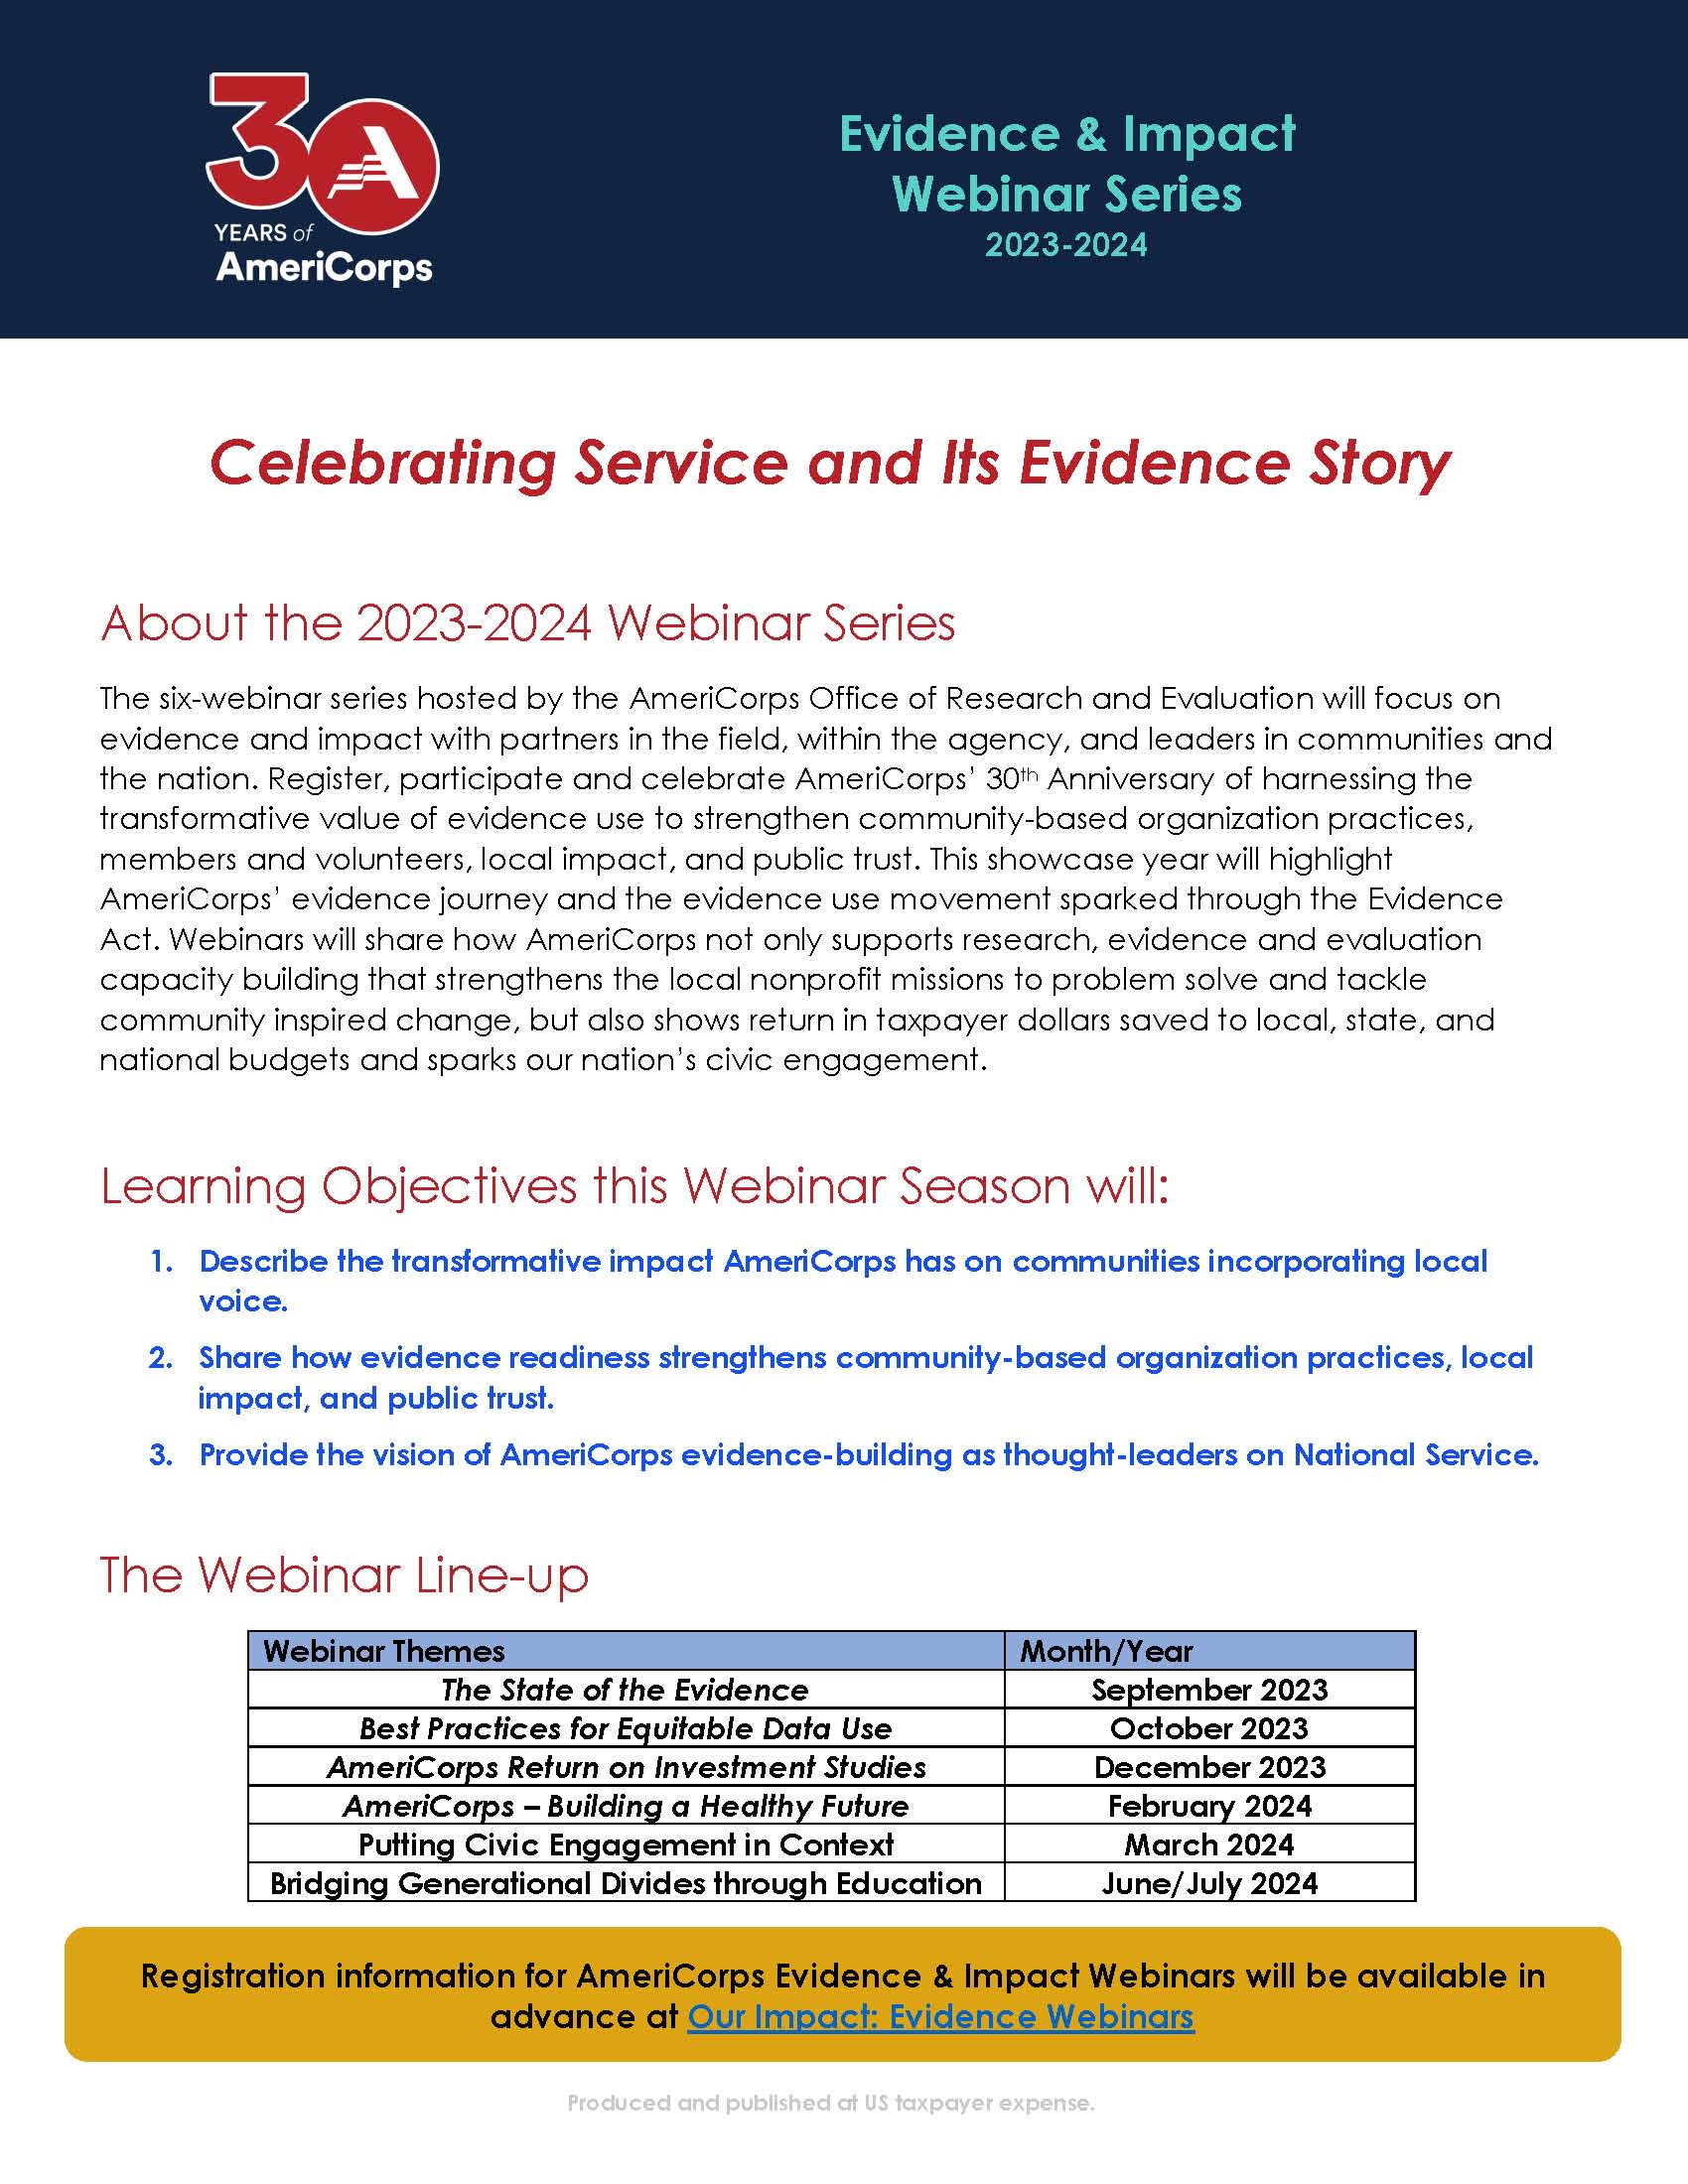 Evidence & Impact Webinar Series 2023-2024